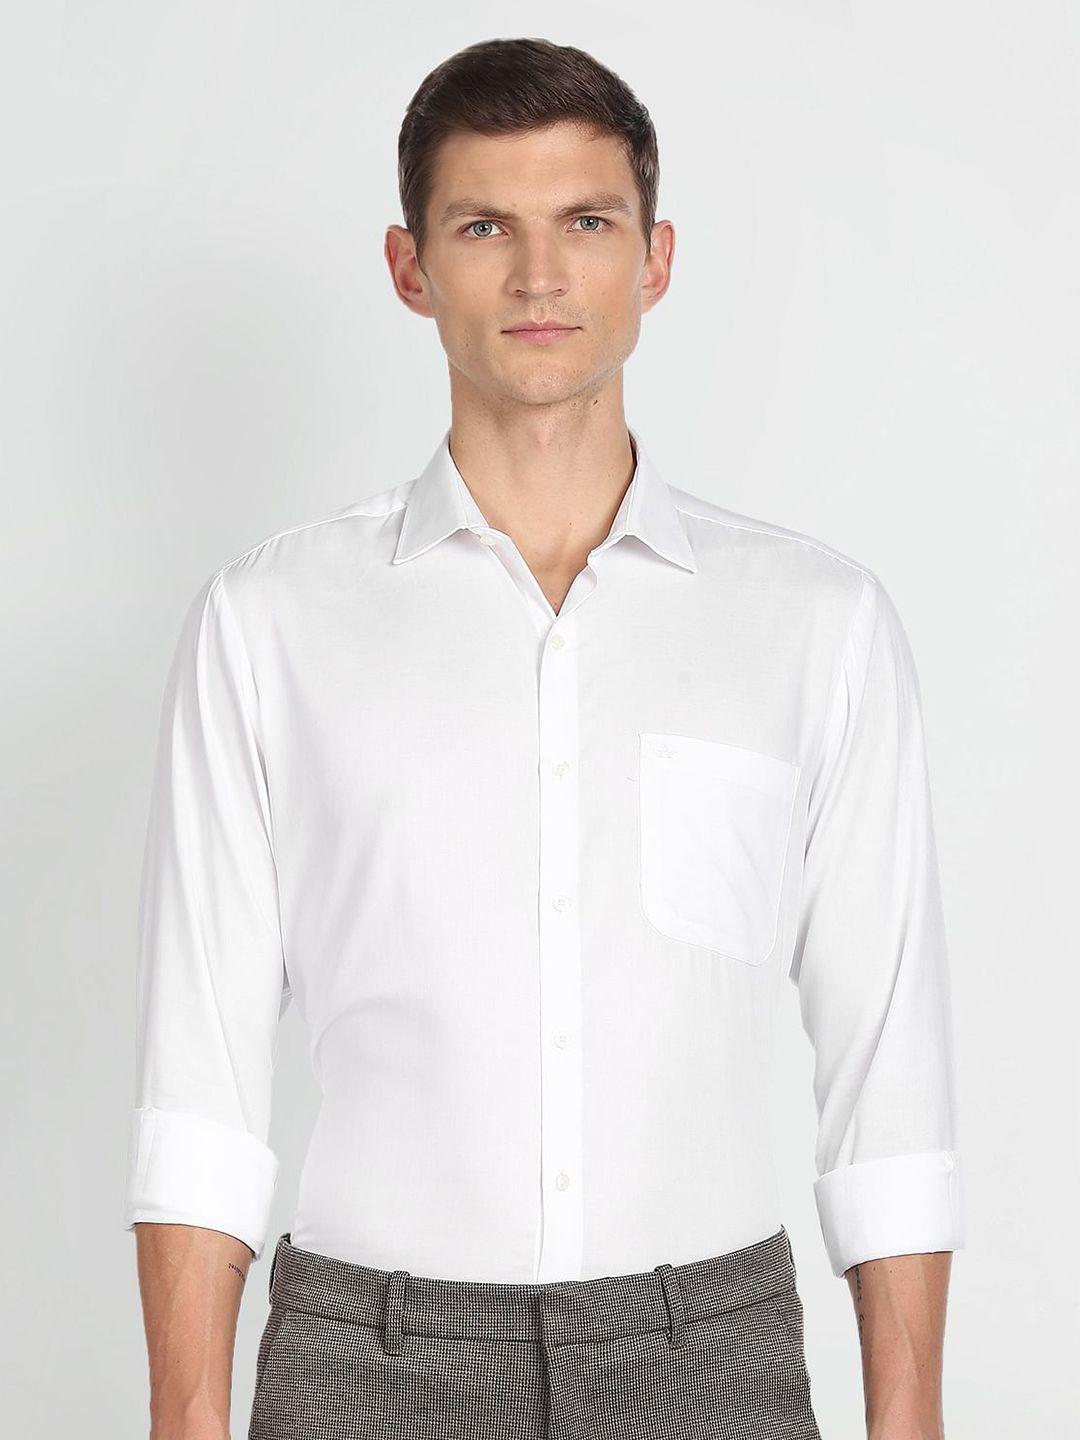 arrow spread collar opaque formal shirt